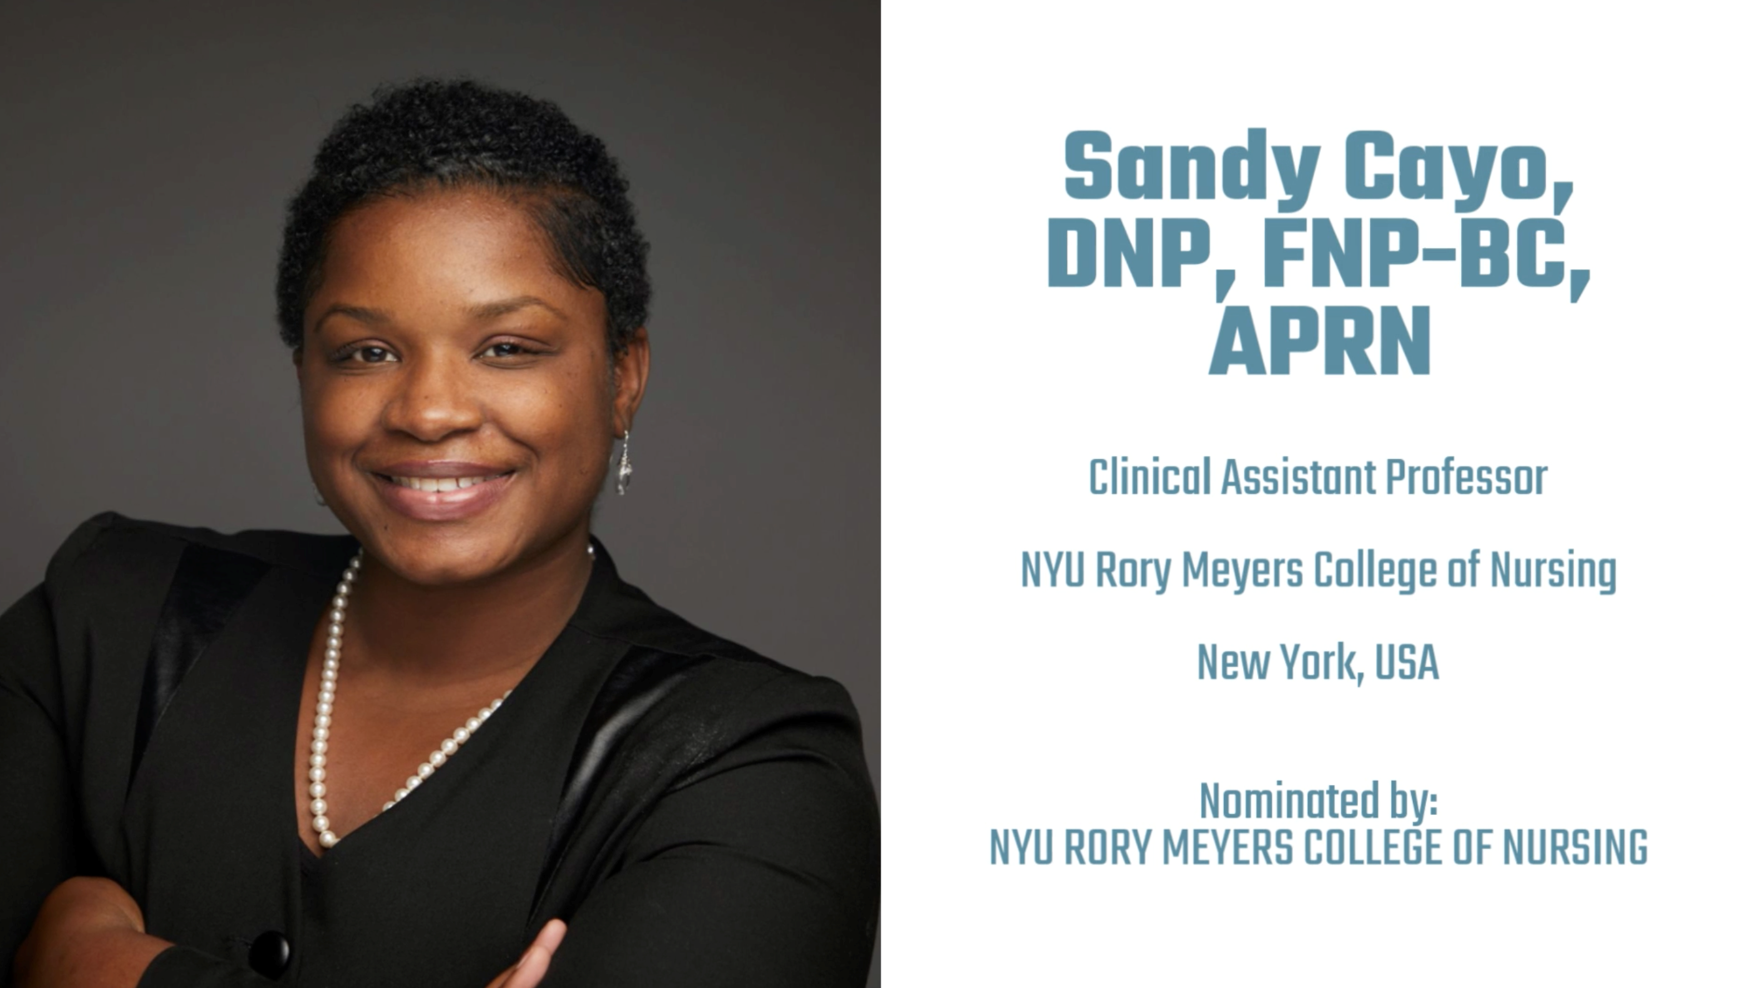 Dr. Sandy Cayo